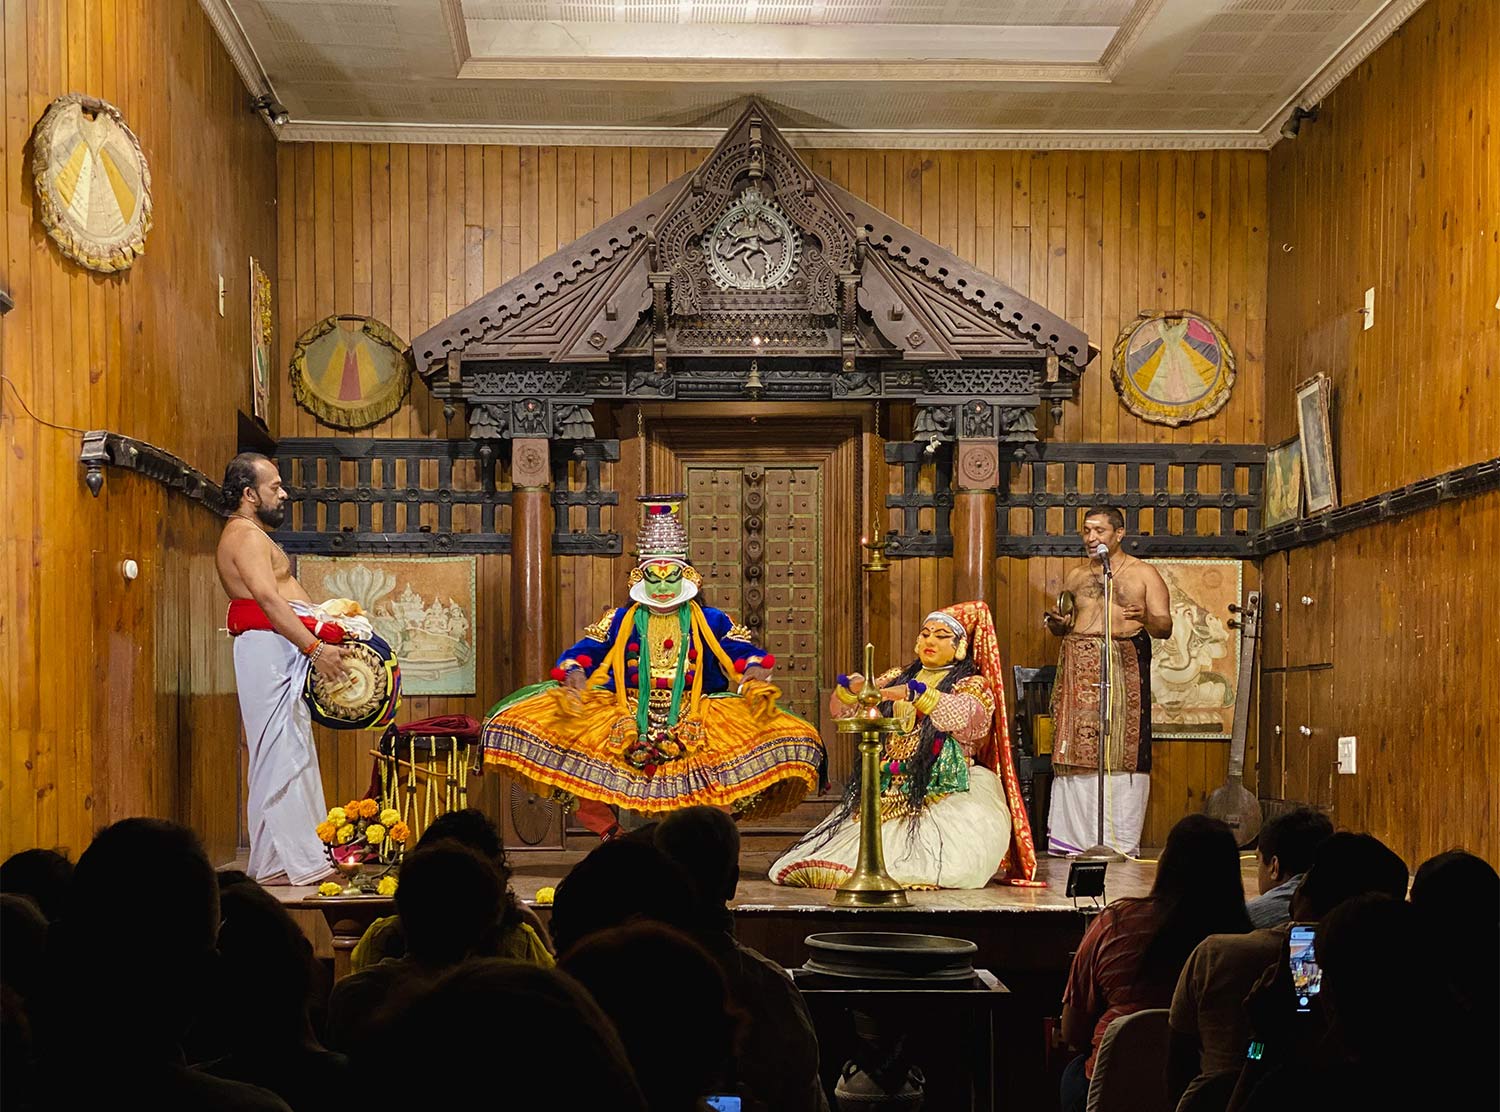 A Kathakali performance depicting a scene from Mahabharata